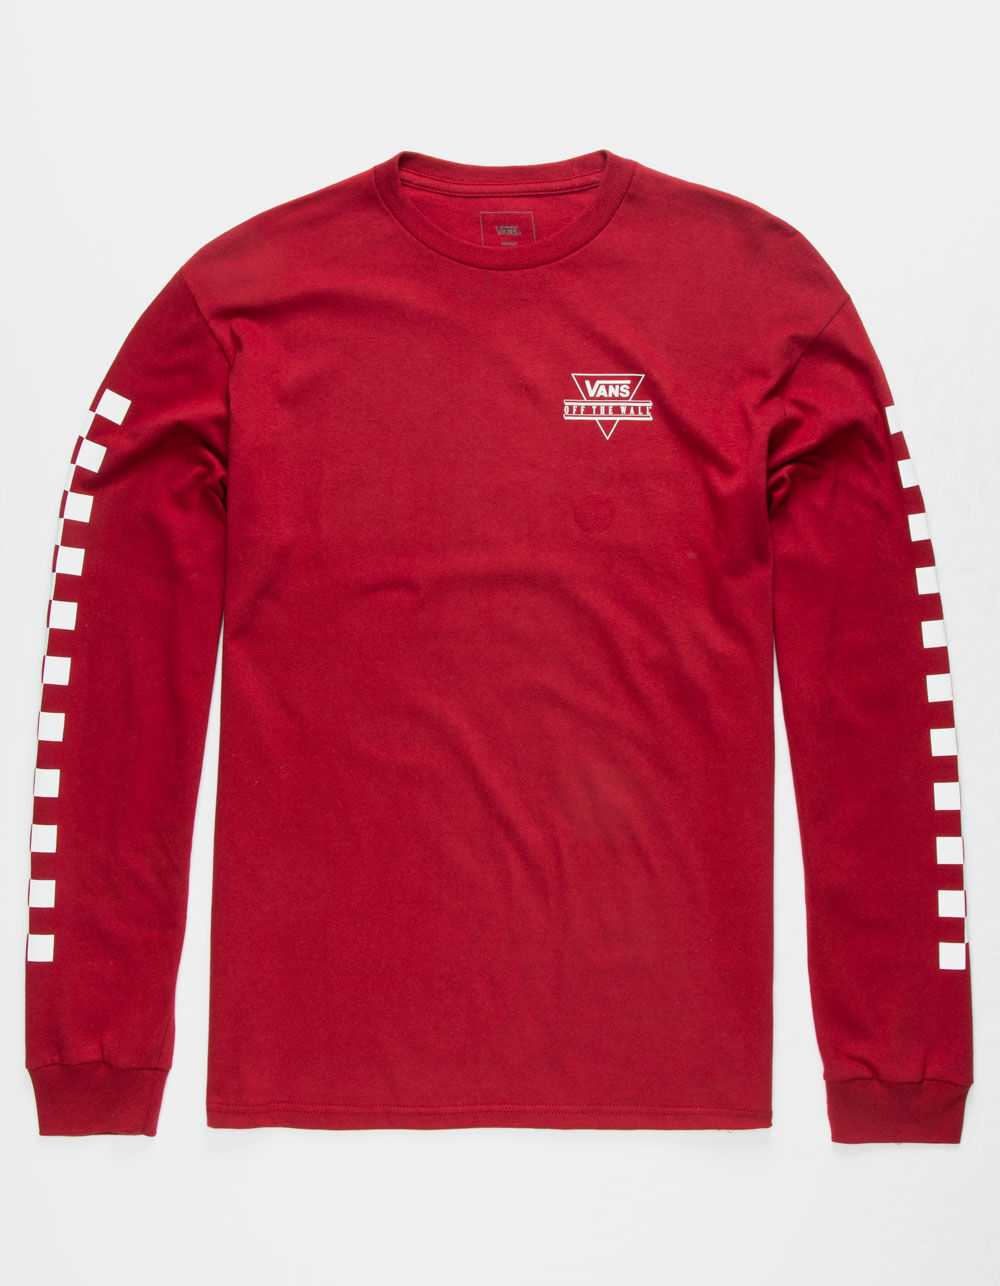 VANS Retro Tri Check Mens T-Shirt - RED | Tillys